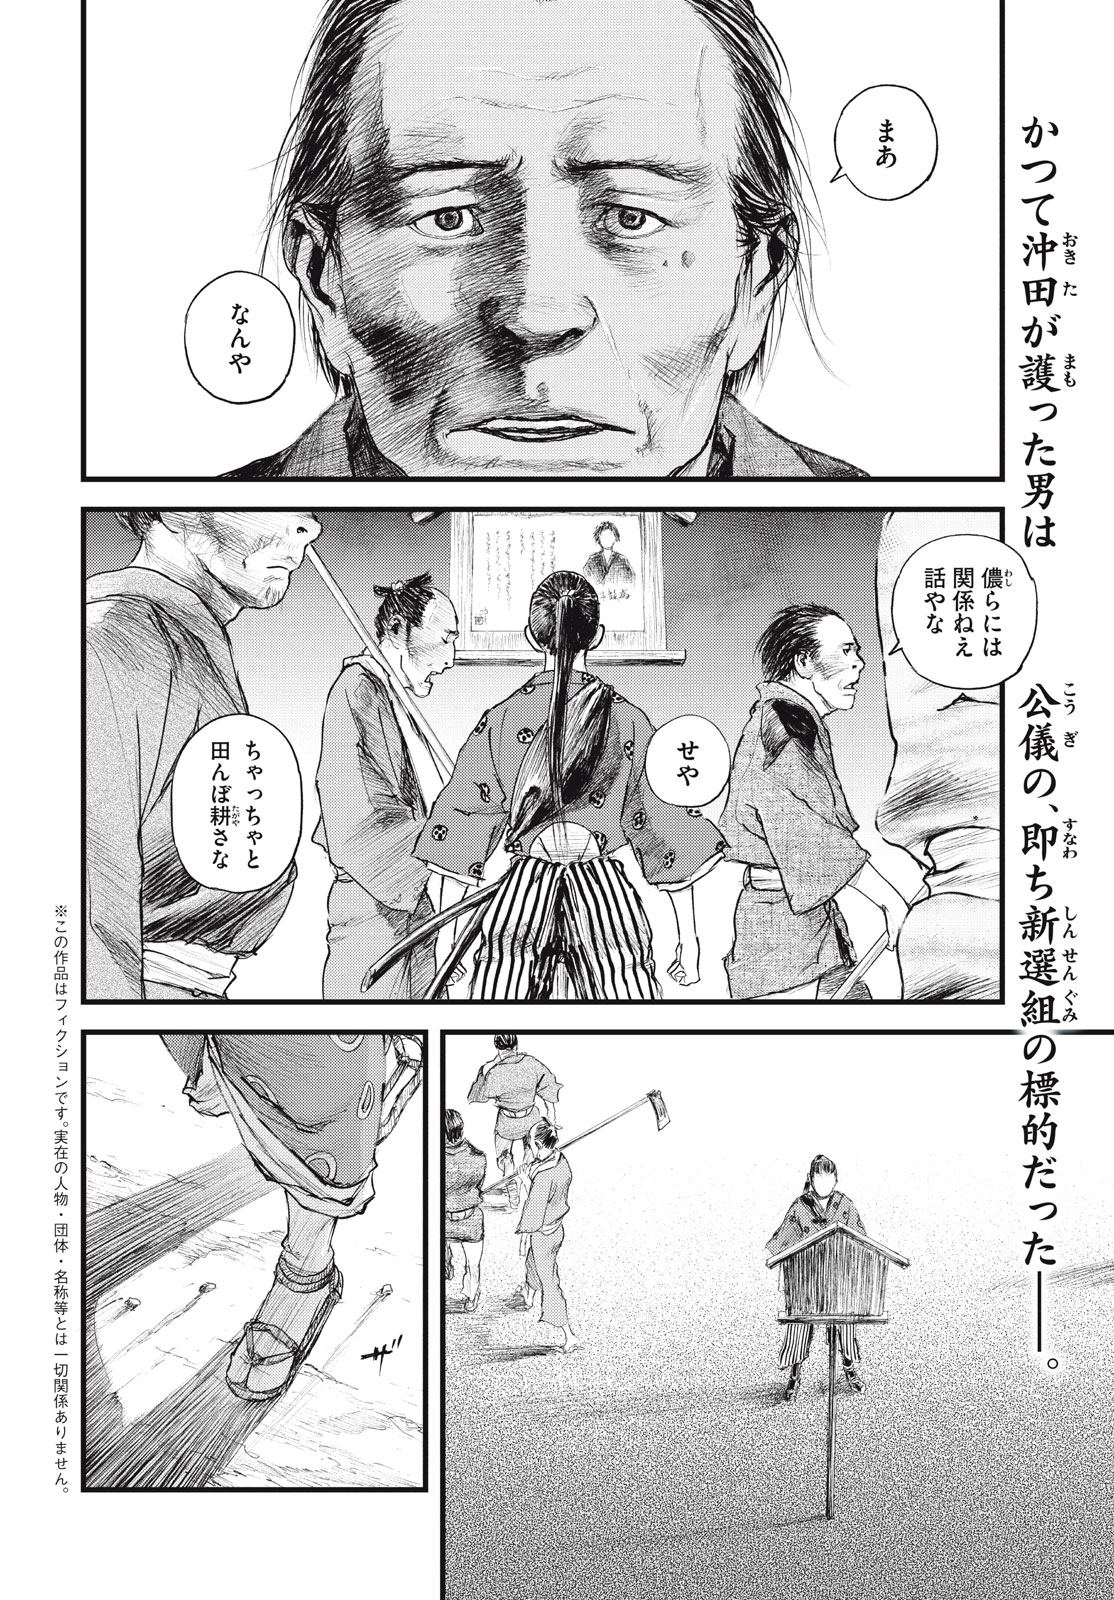 Blade of the Immortal: Bakumatsu Arc - Chapter 50 - Page 2